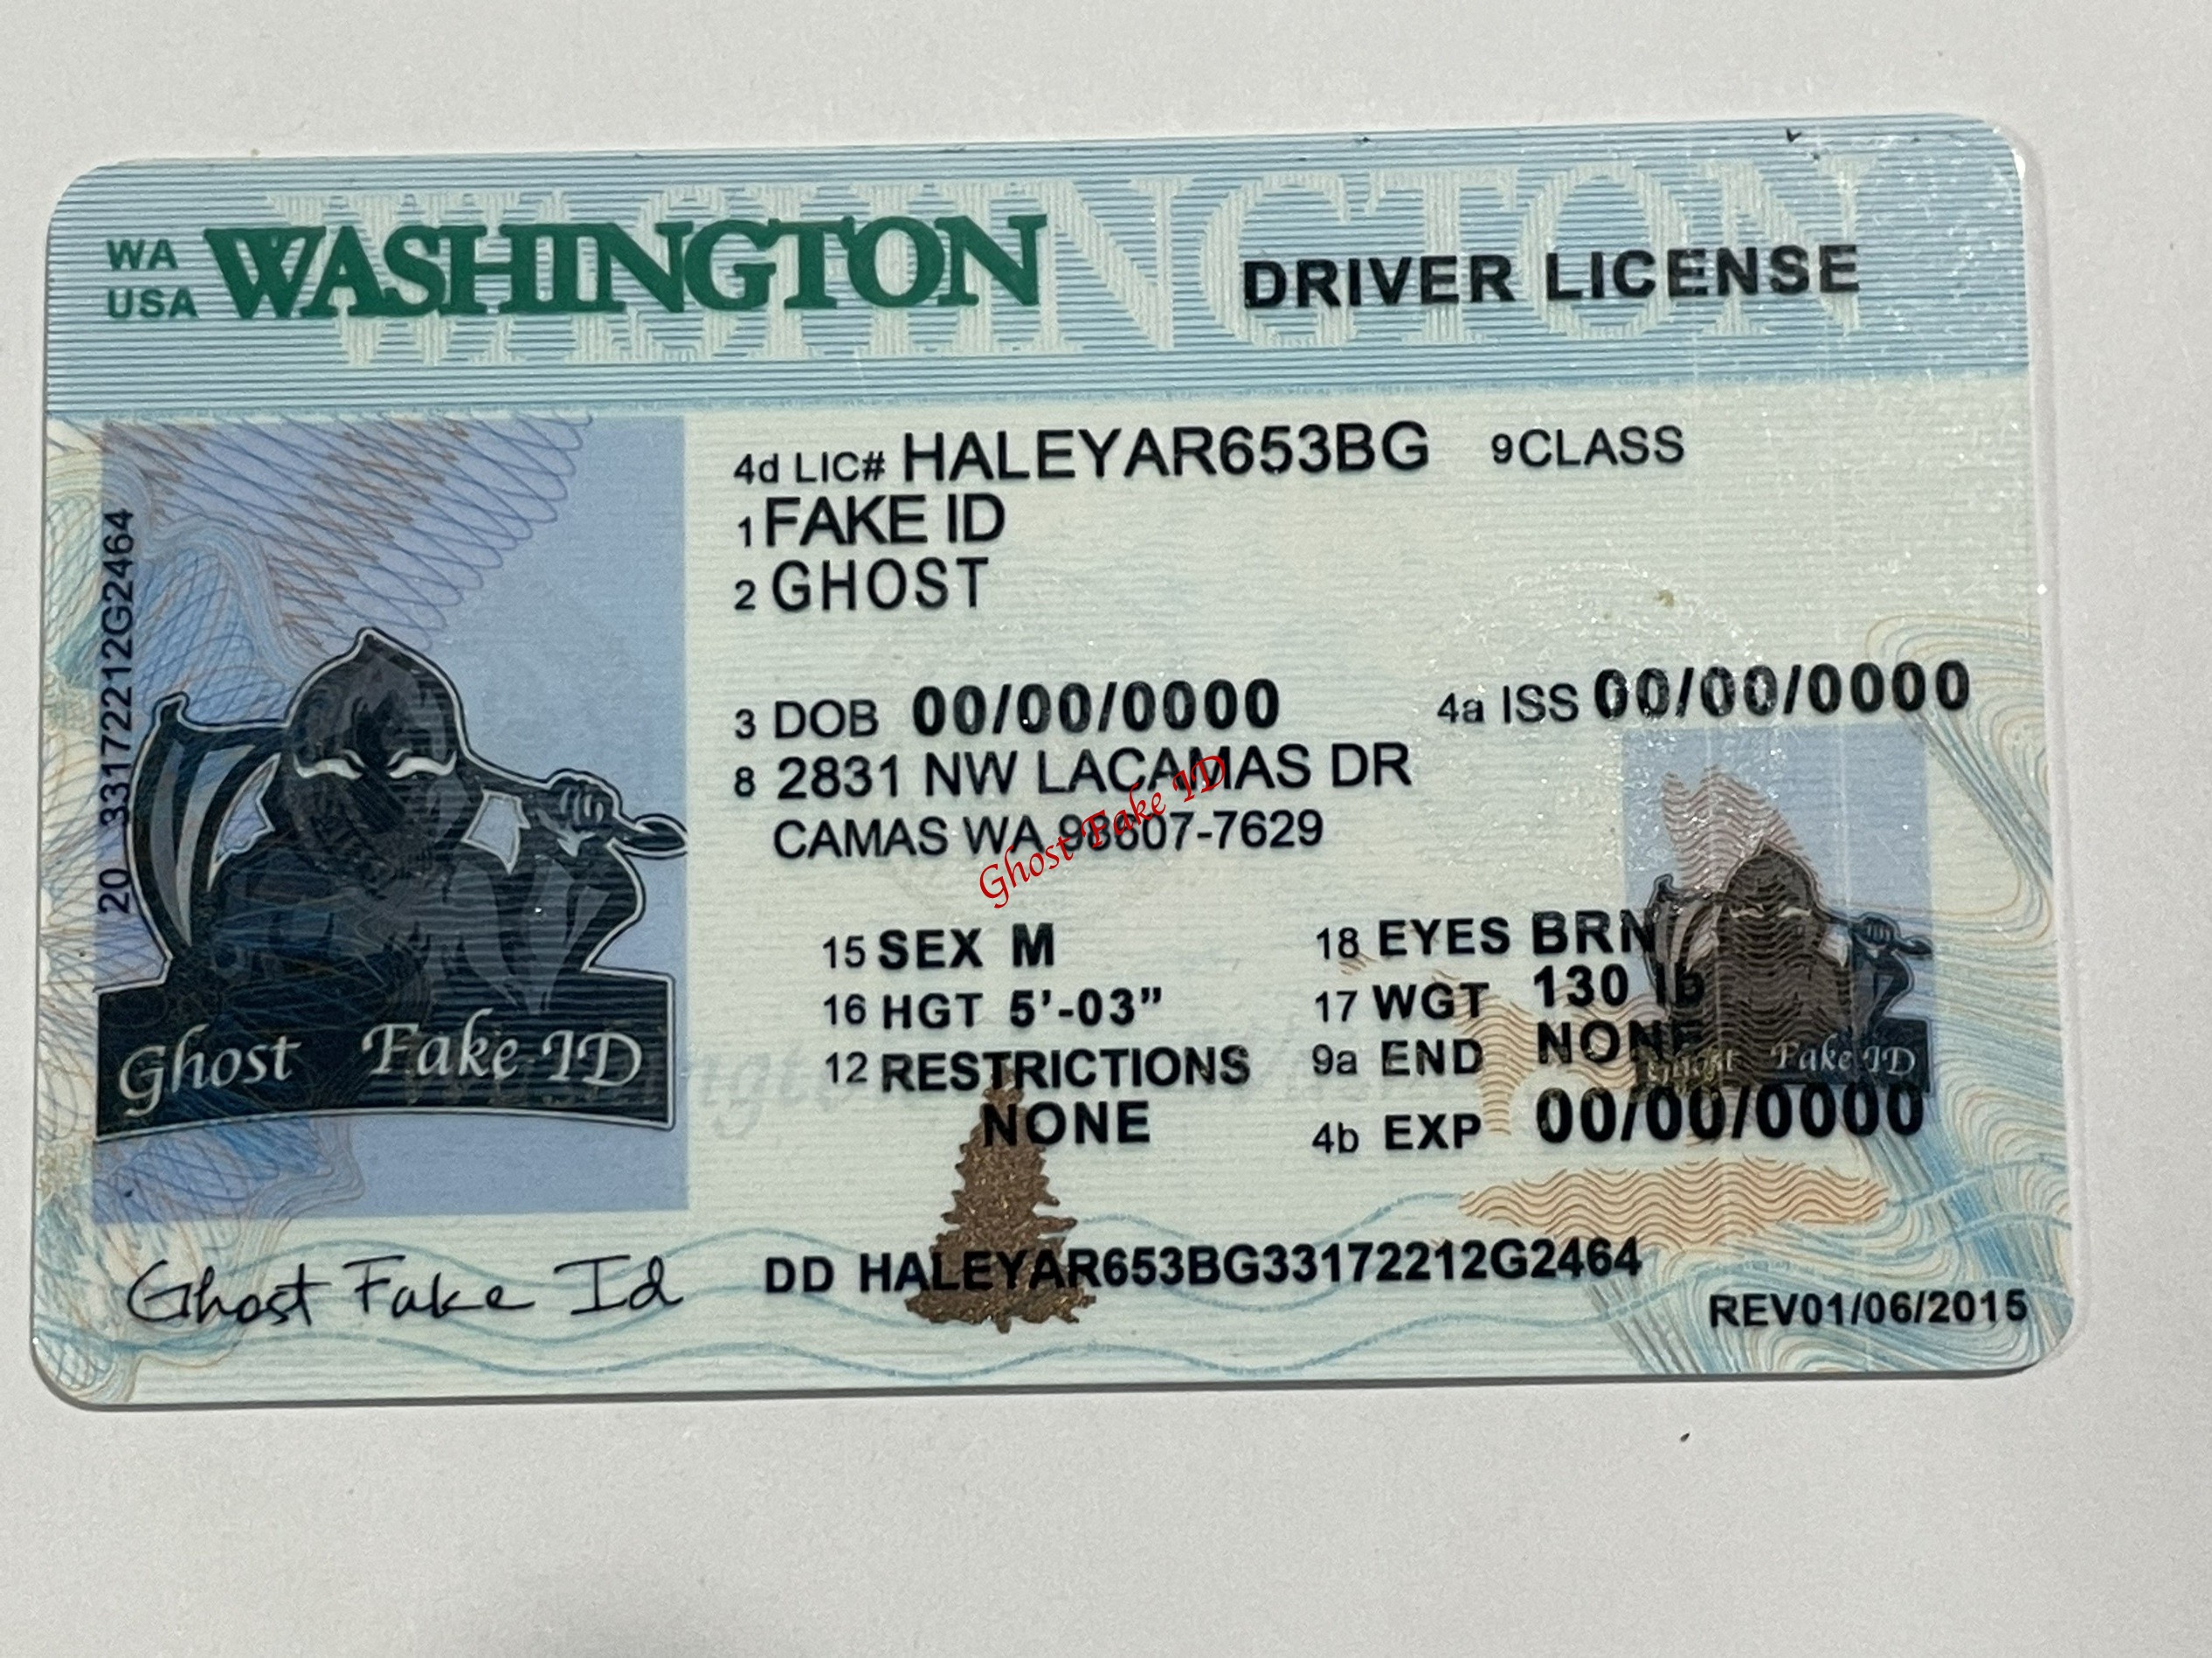 Washington - Scanable fake id